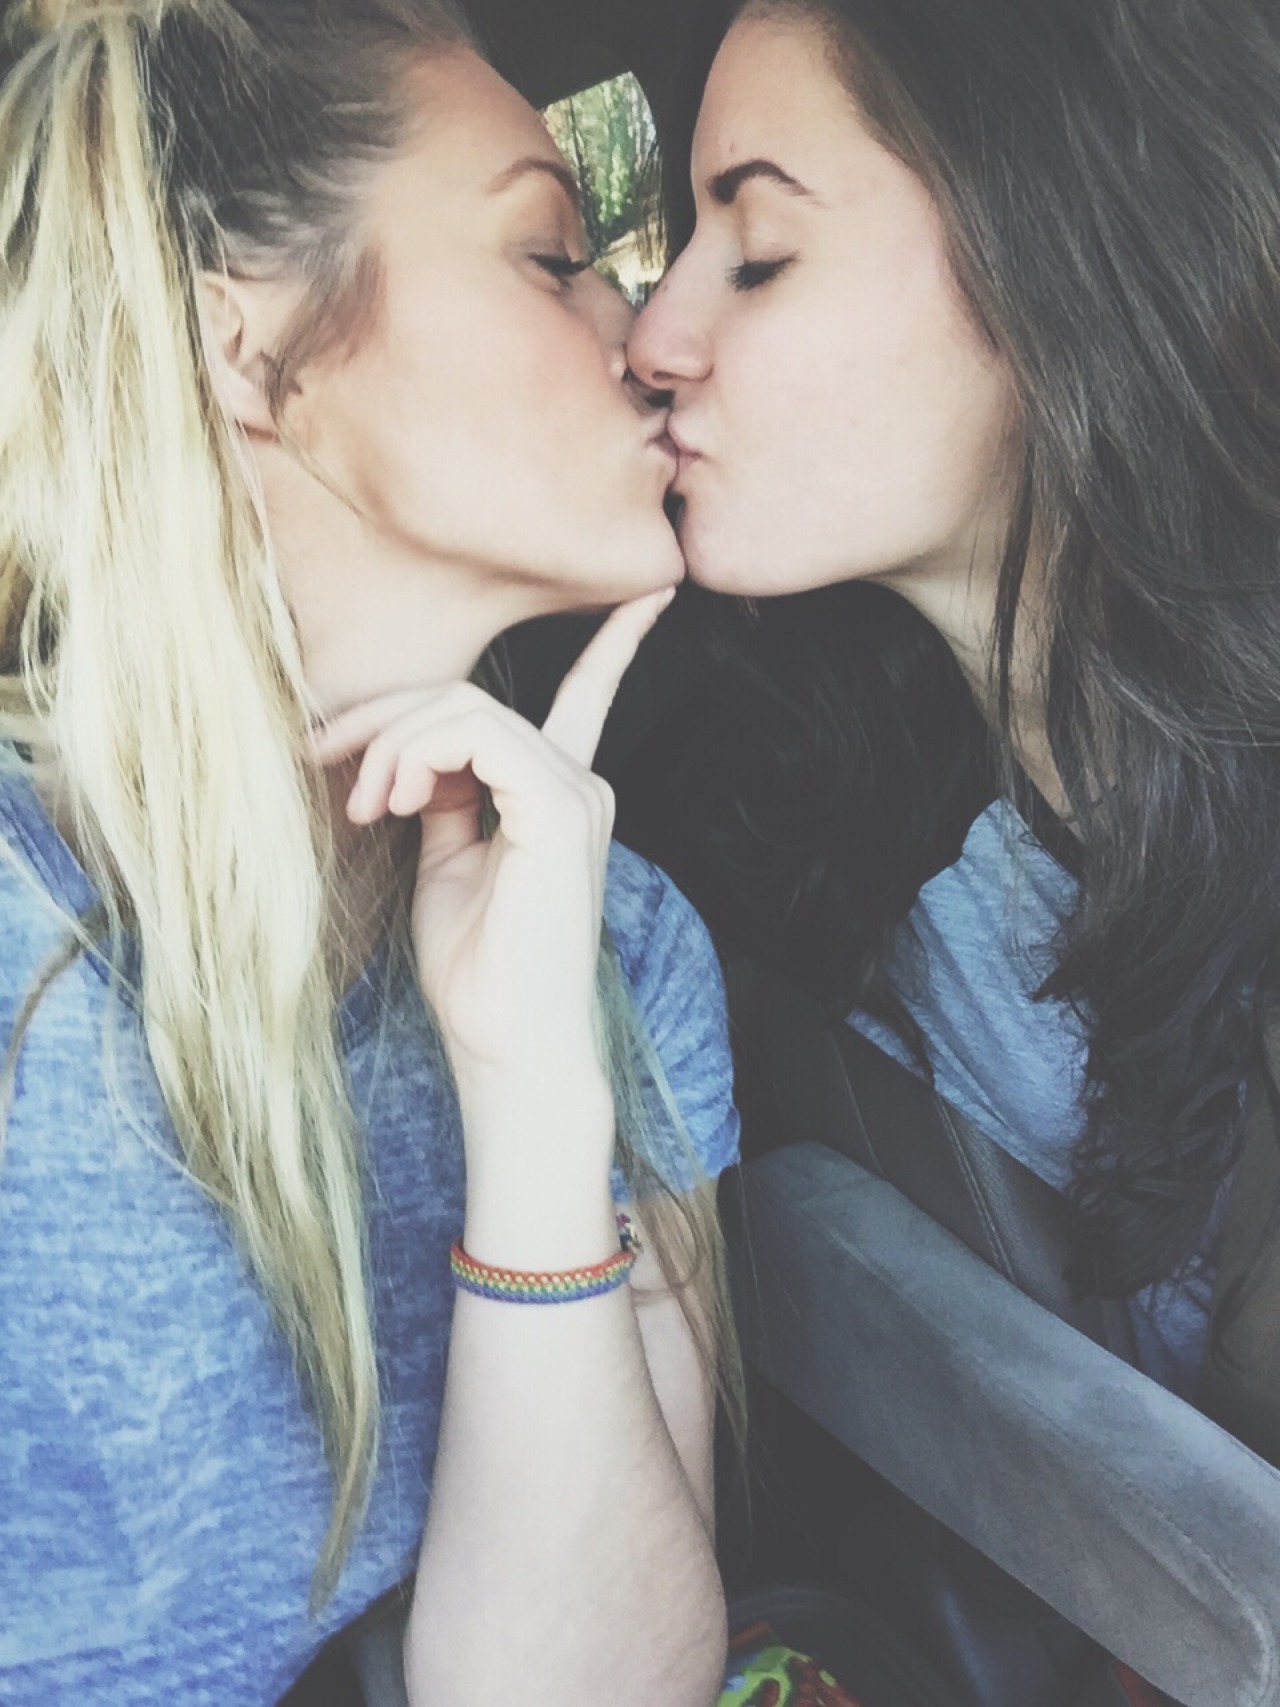 Schoolgirl Tumblr Lesbians